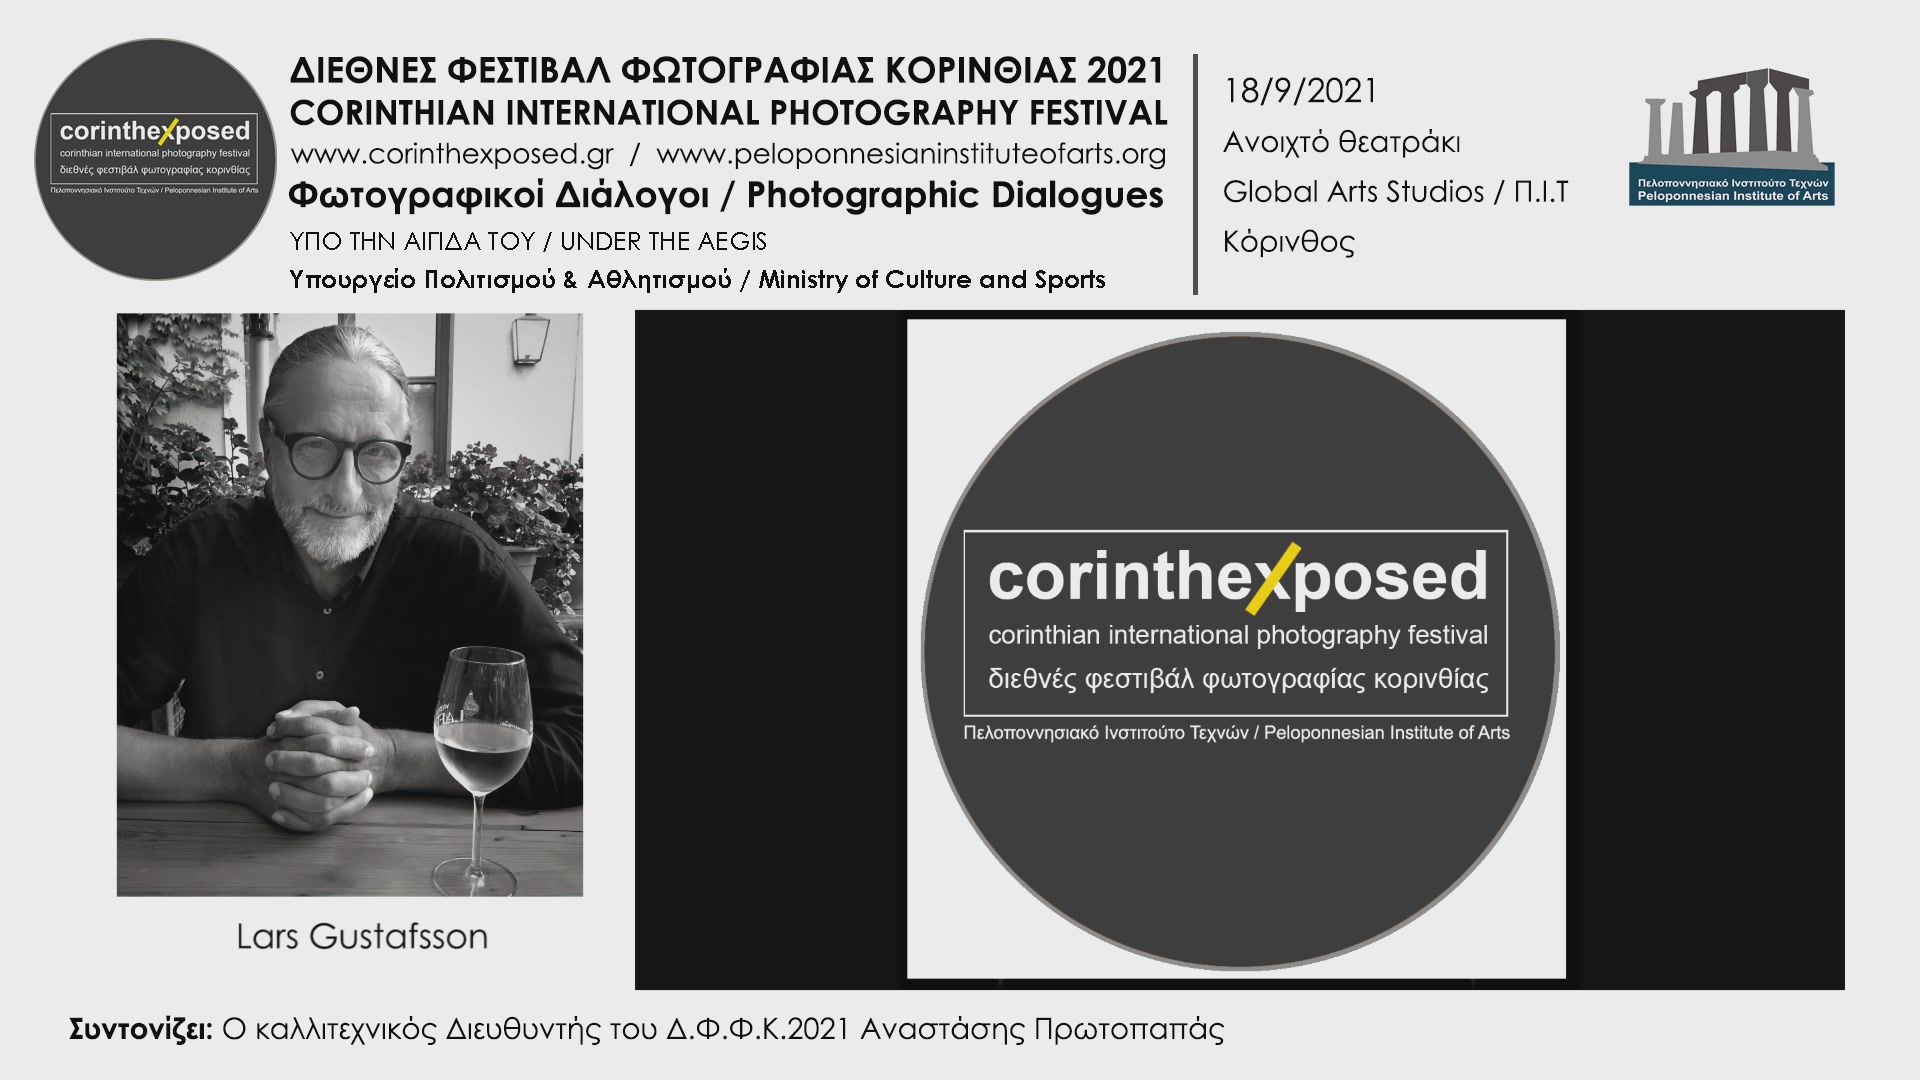 Lars Gustafsson - Photographic dialogs 2021 (video)